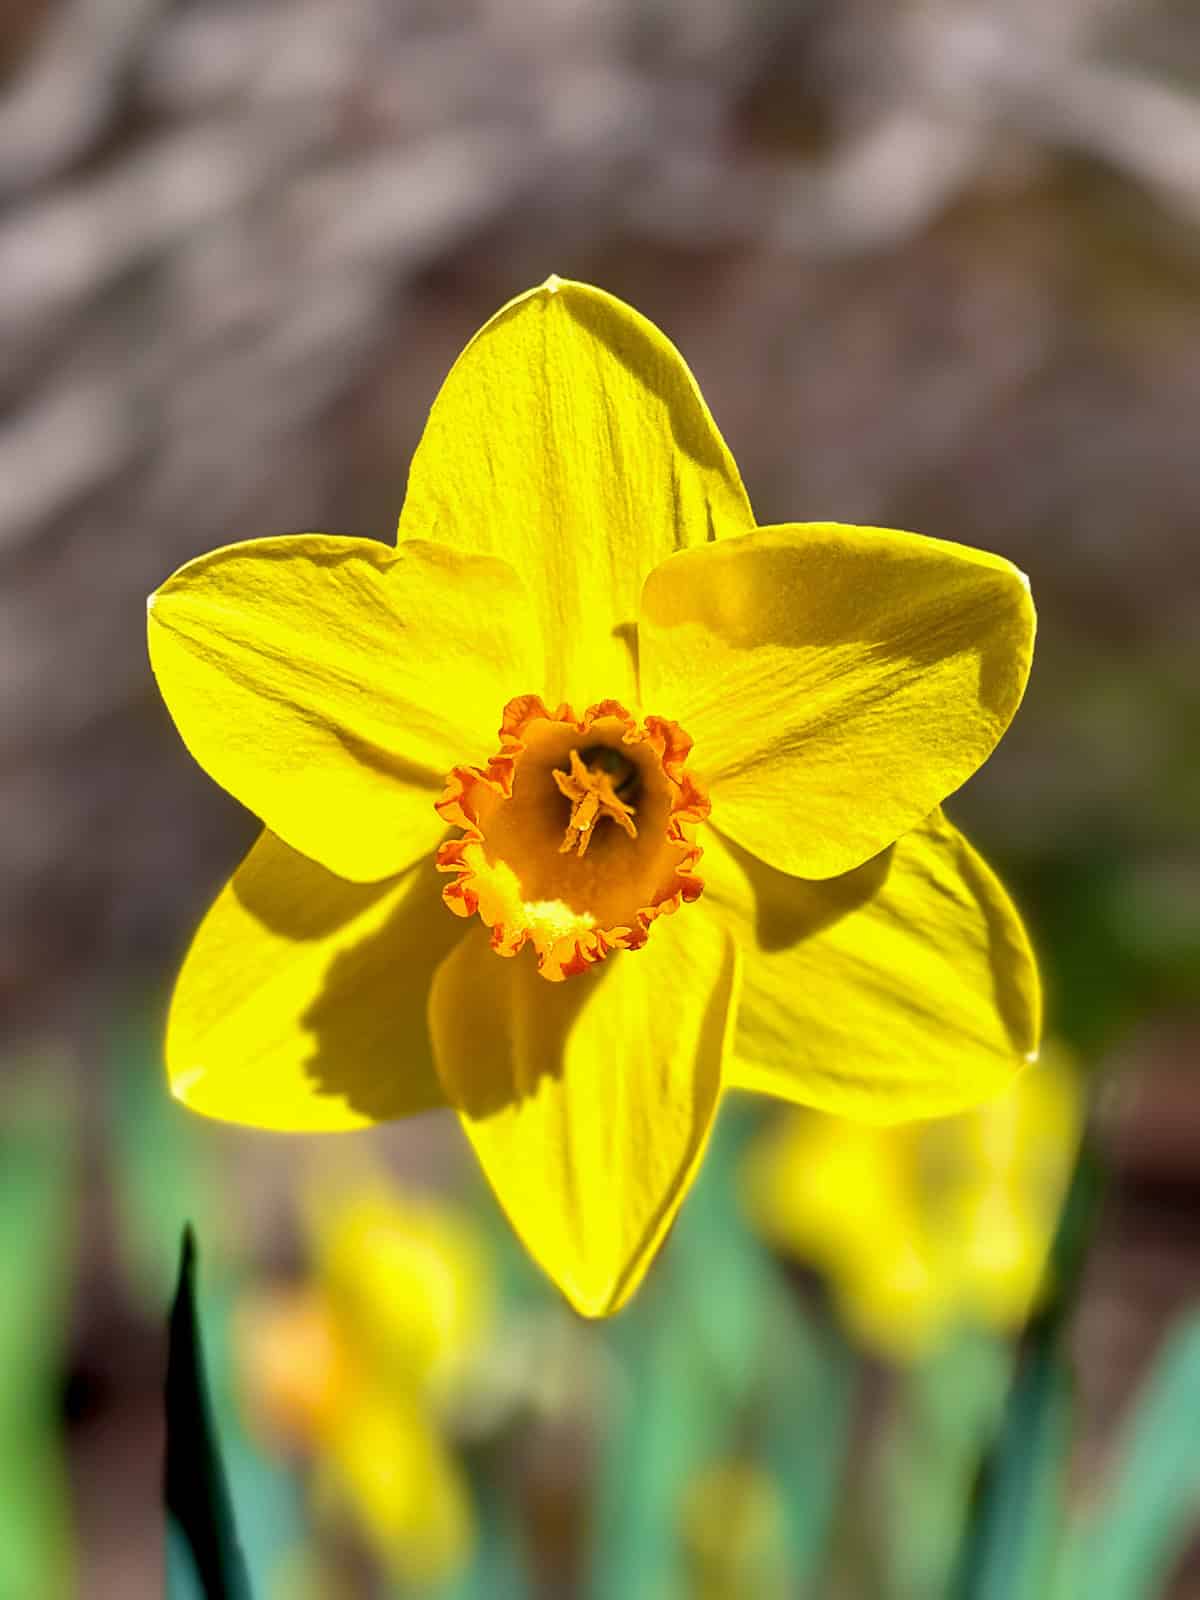 Red Butte Gardens Daffodil blooming in Utah in April